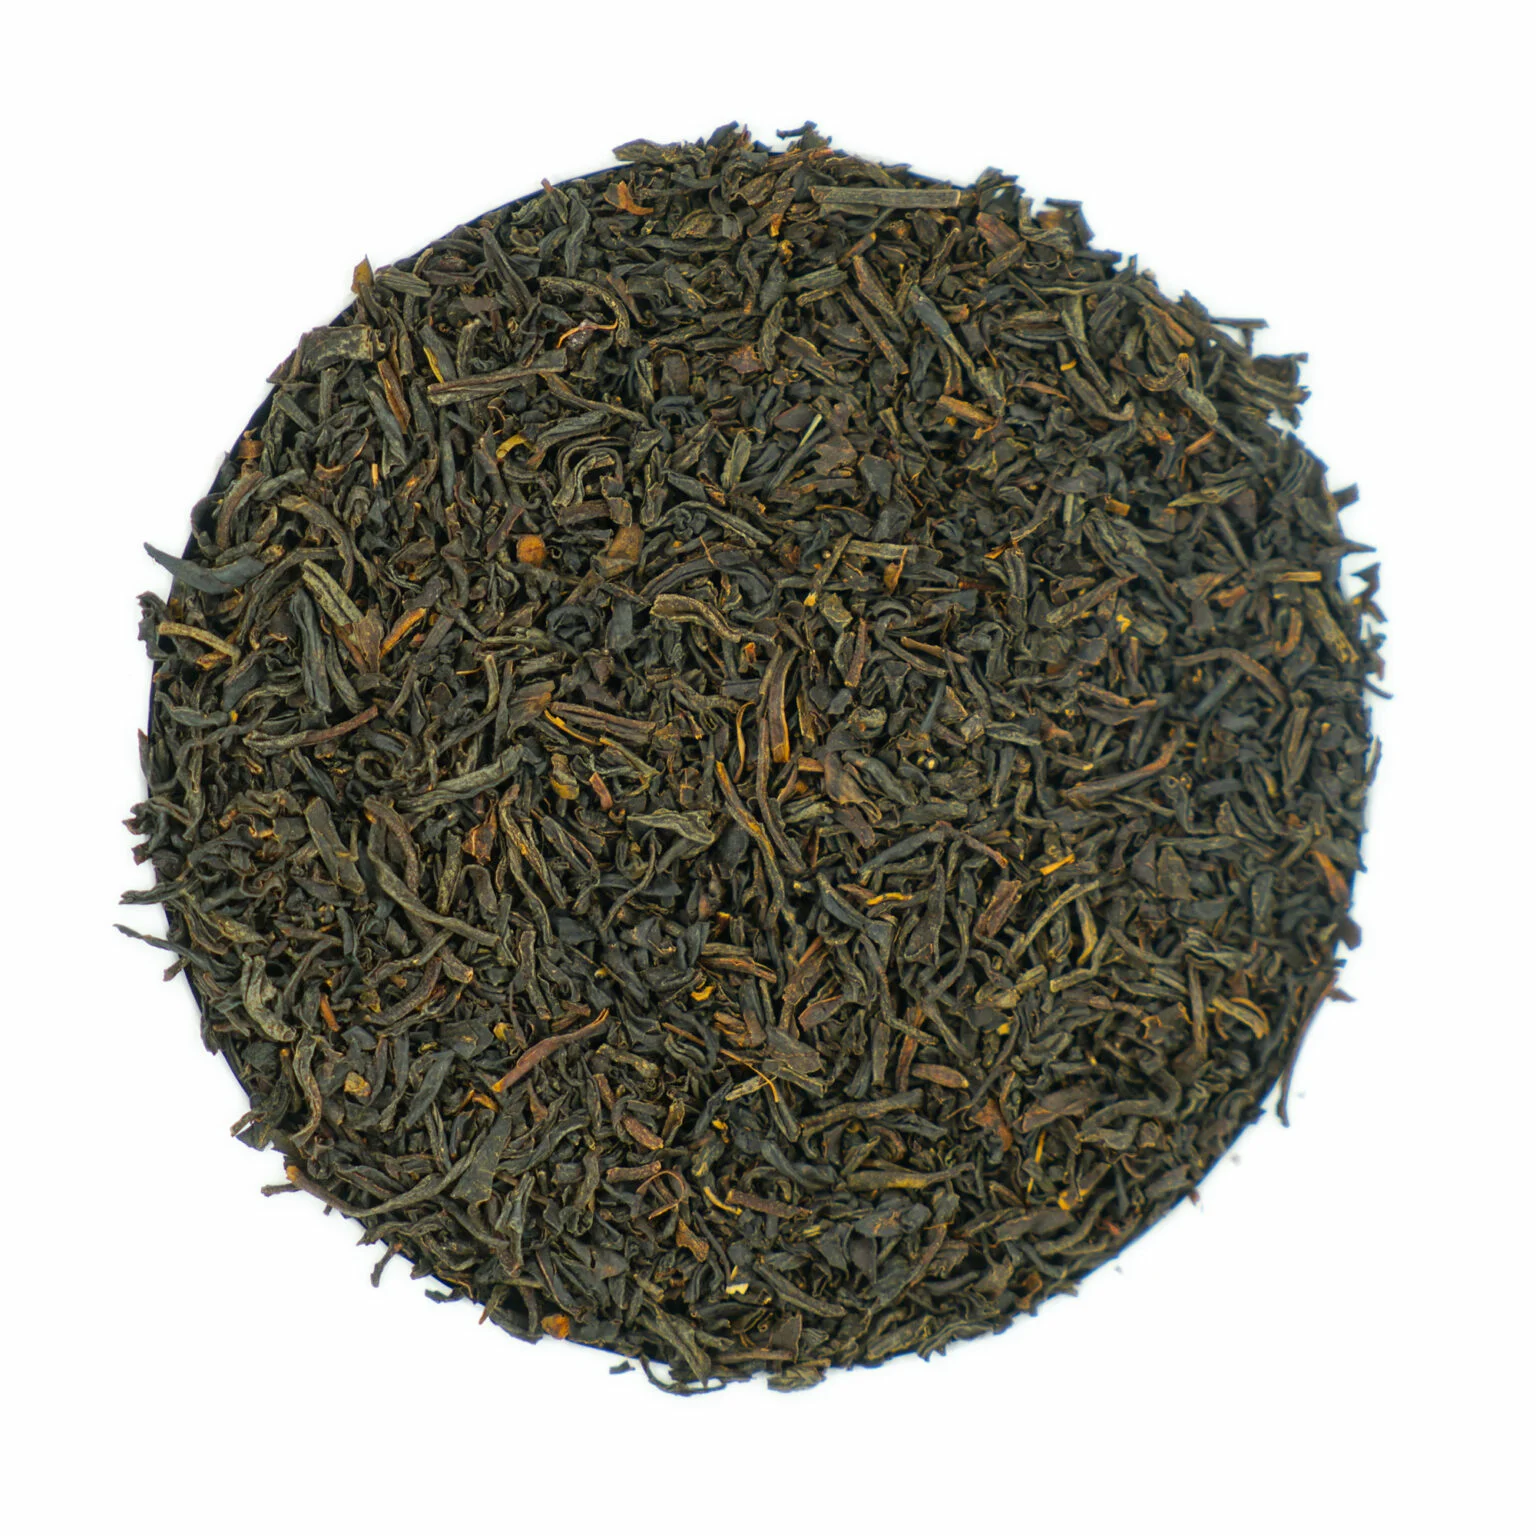 Herbata Keemun – Odkryj zbalansowany smak